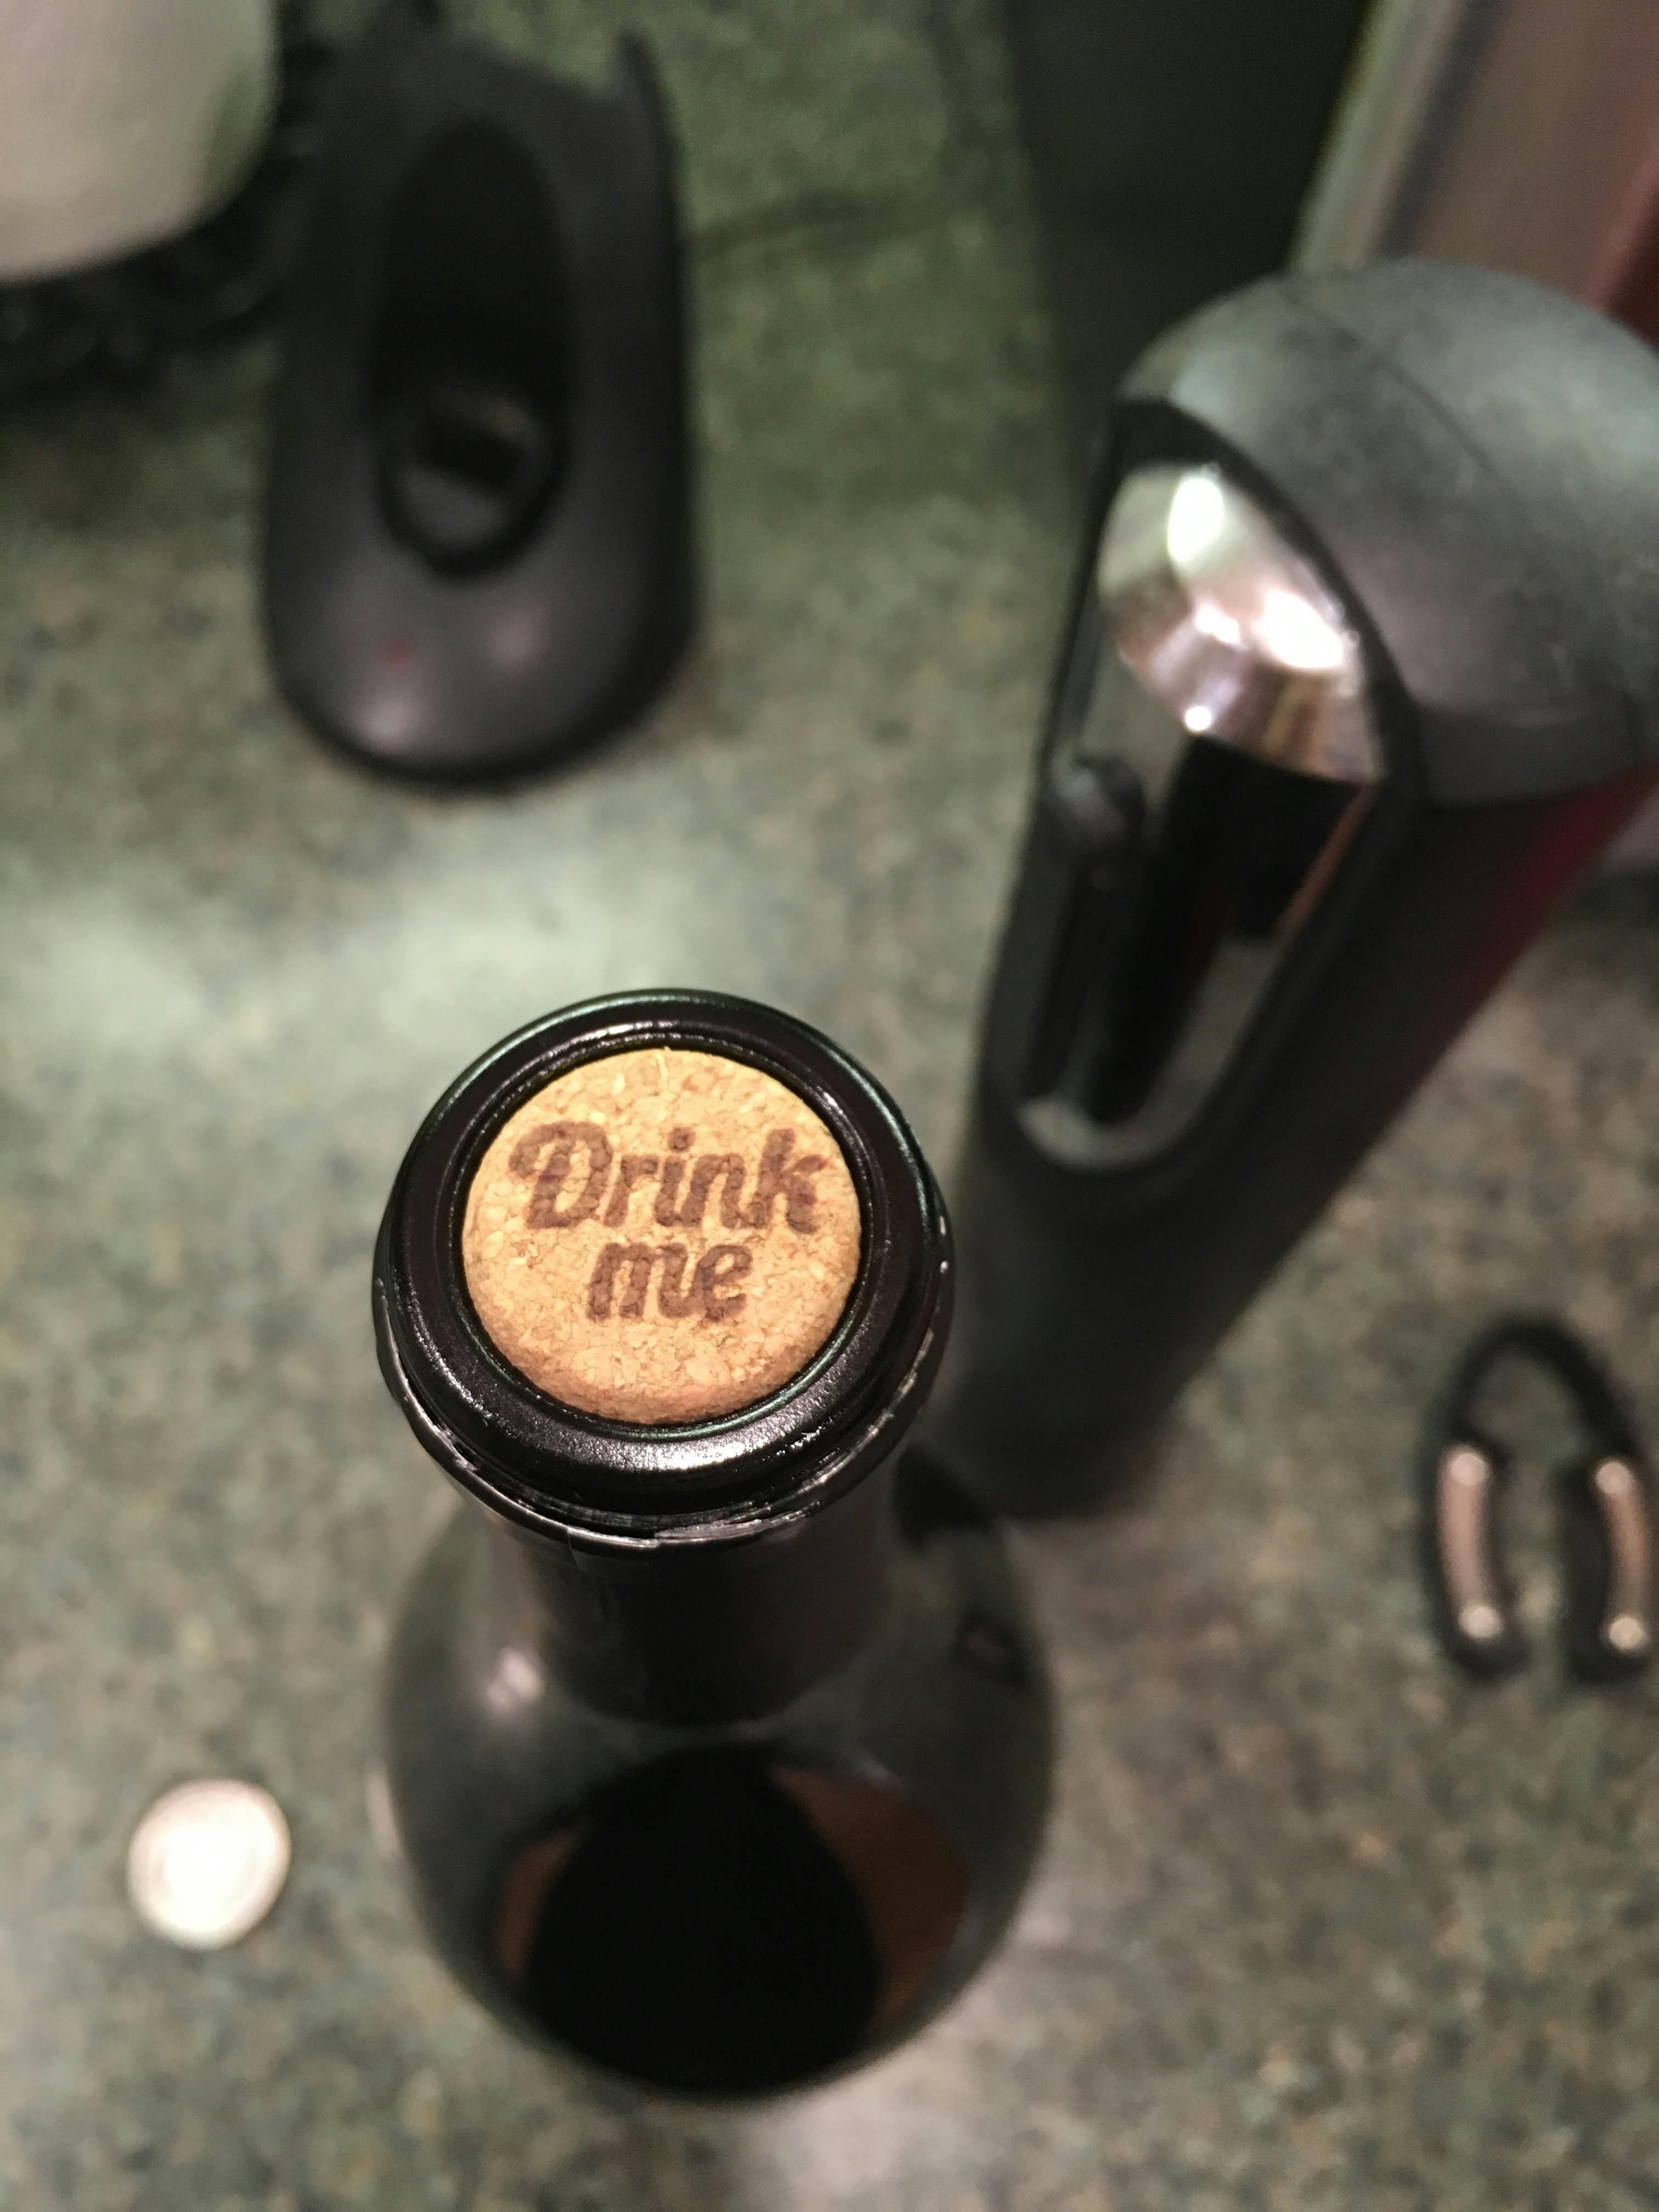 Free stock photo of drink me, wine, wine bottle